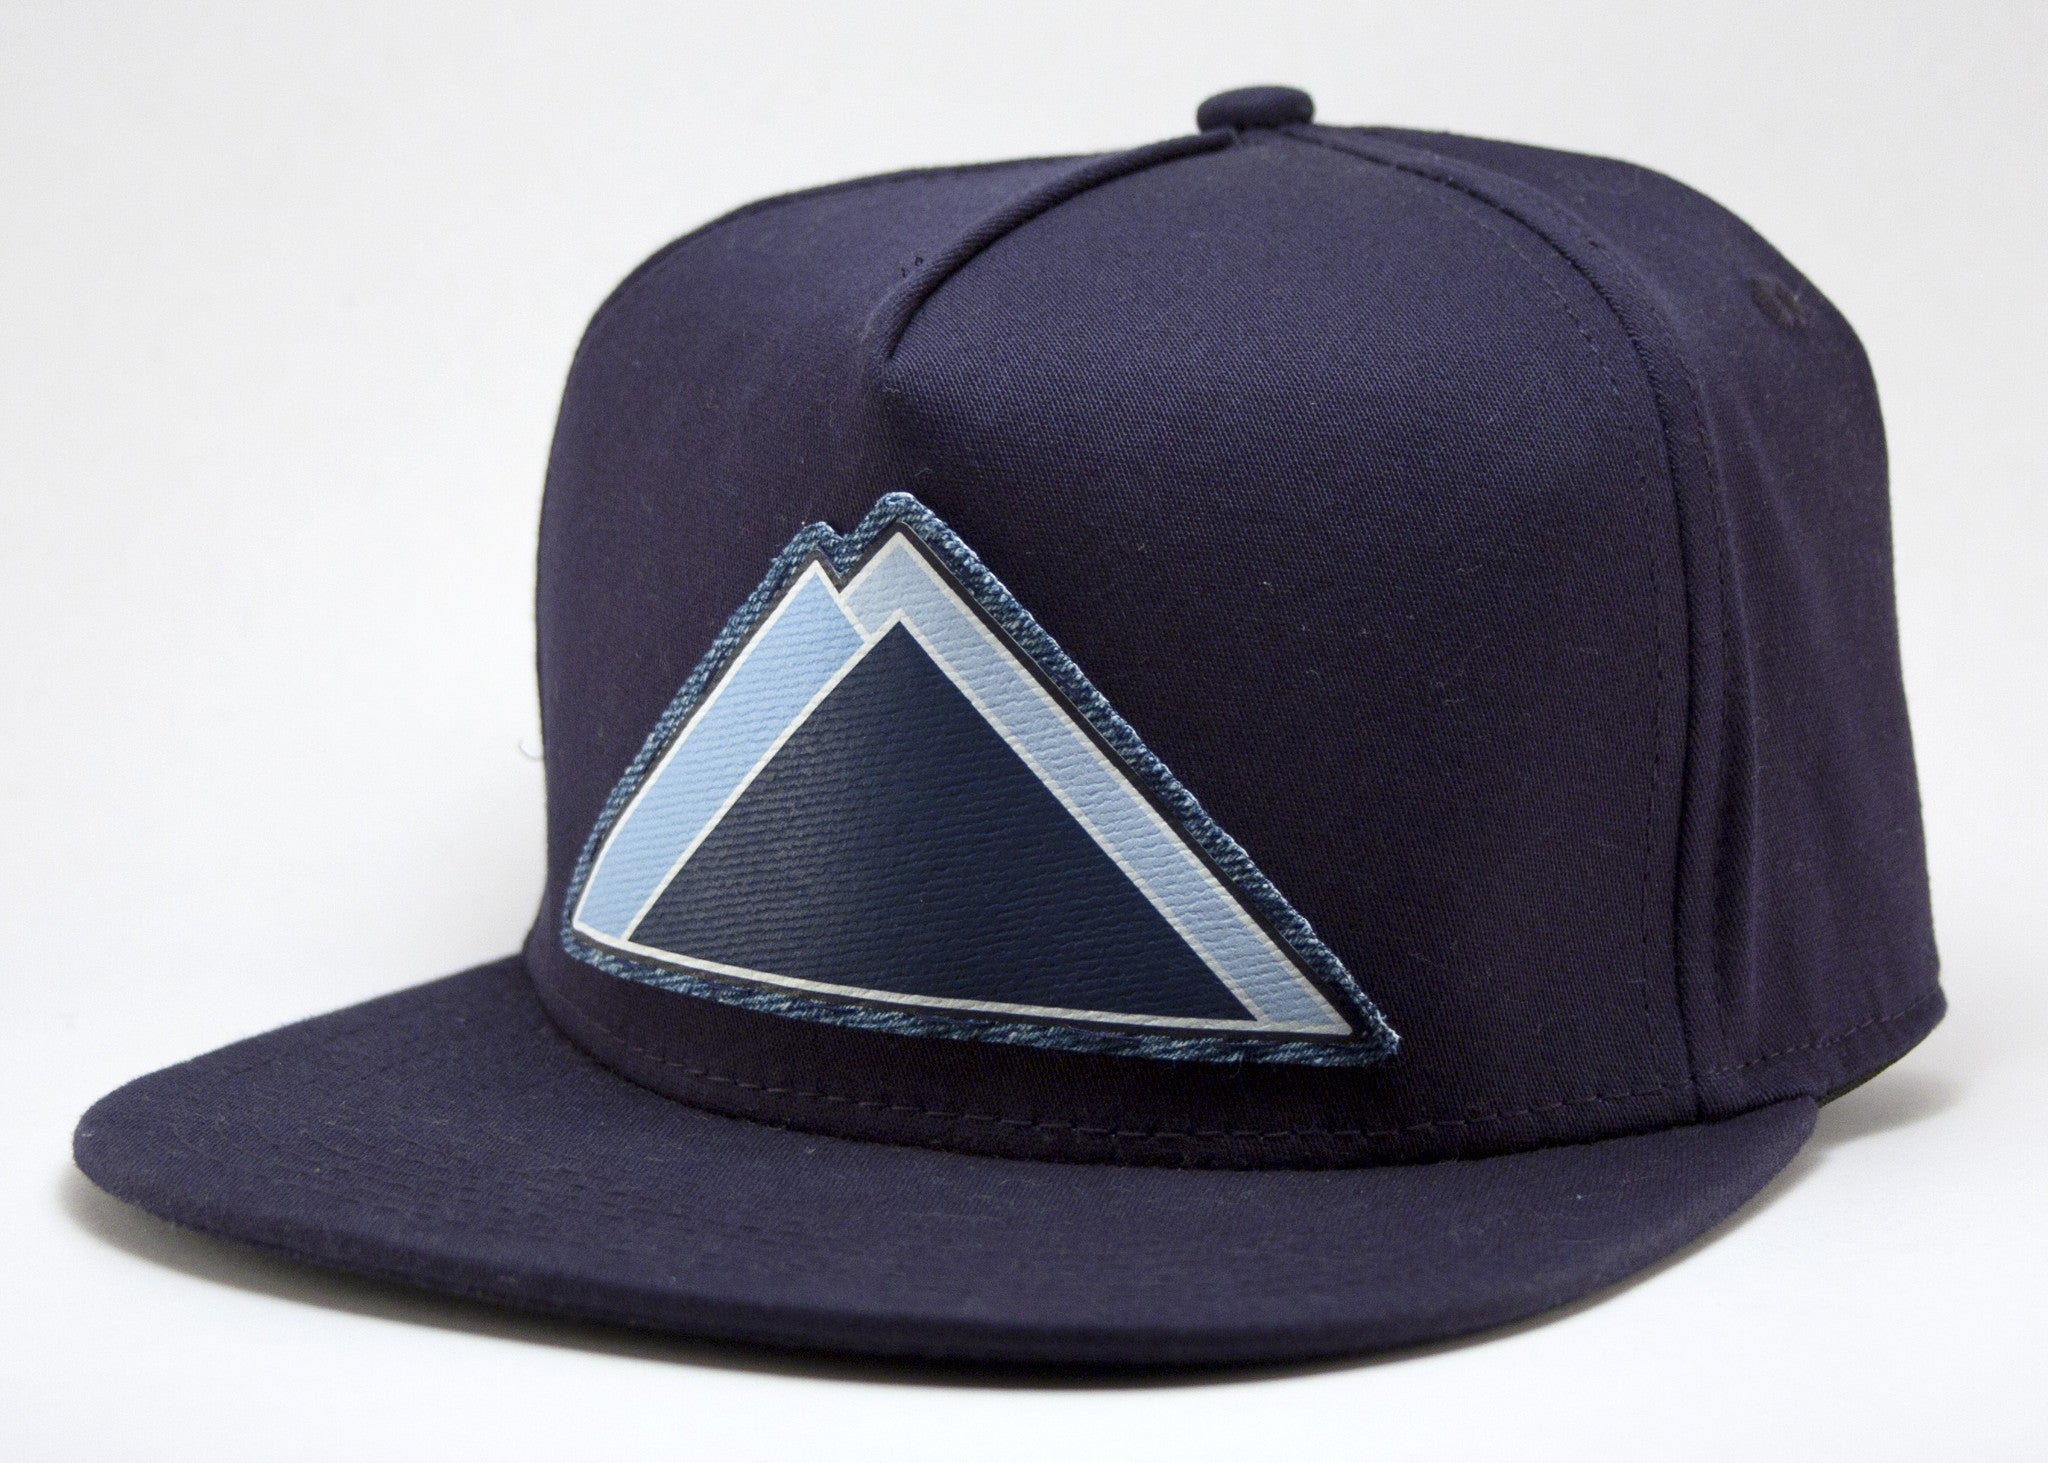 HTLK: Mountains - Hats